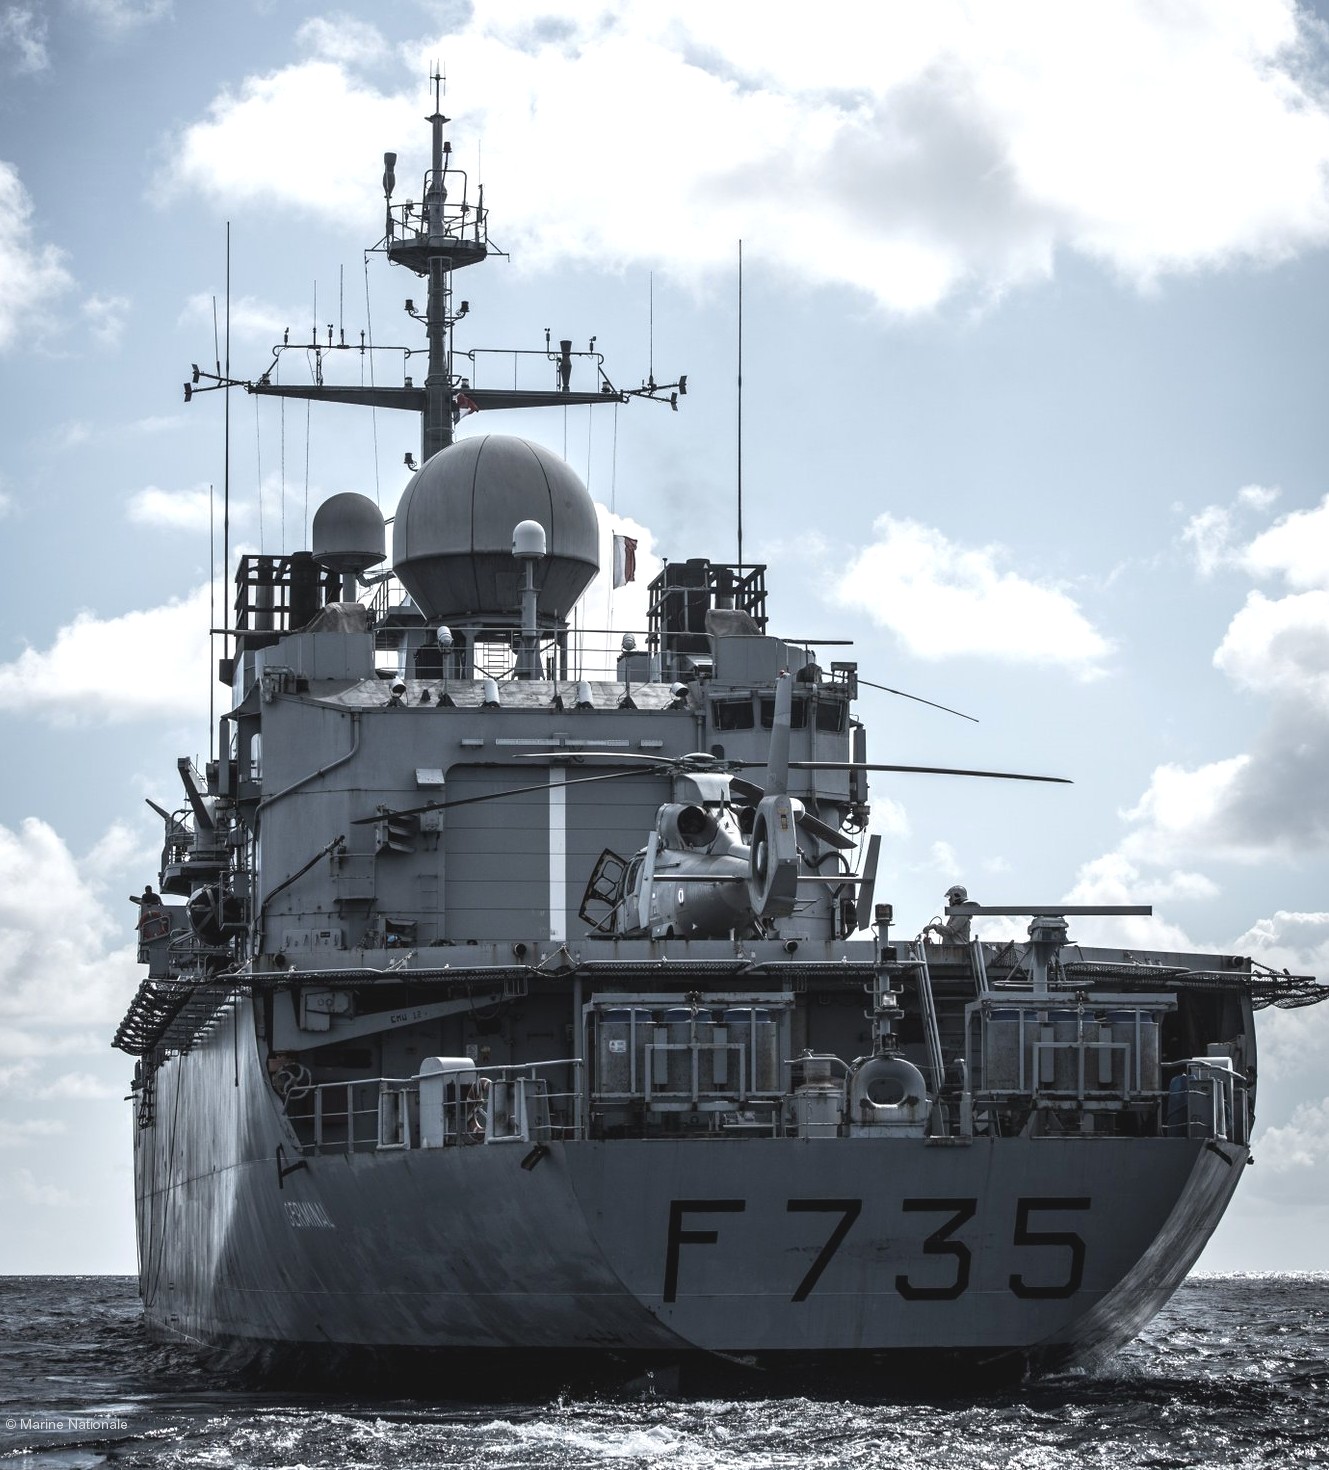 f-735 fs germinal floreal class frigate french navy marine nationale fregate de surveillance 04